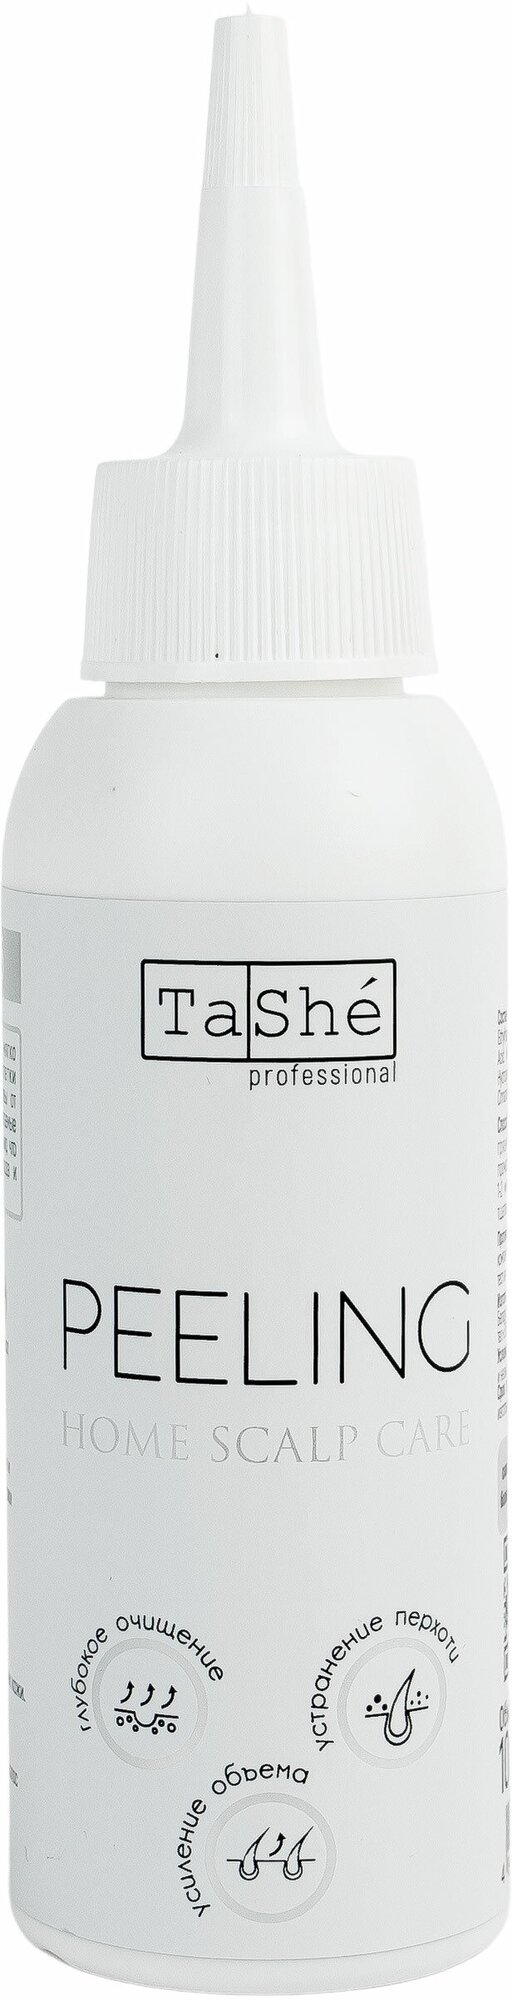 Пилинг для кожи головы Tashe Professional Home Care 100 мл